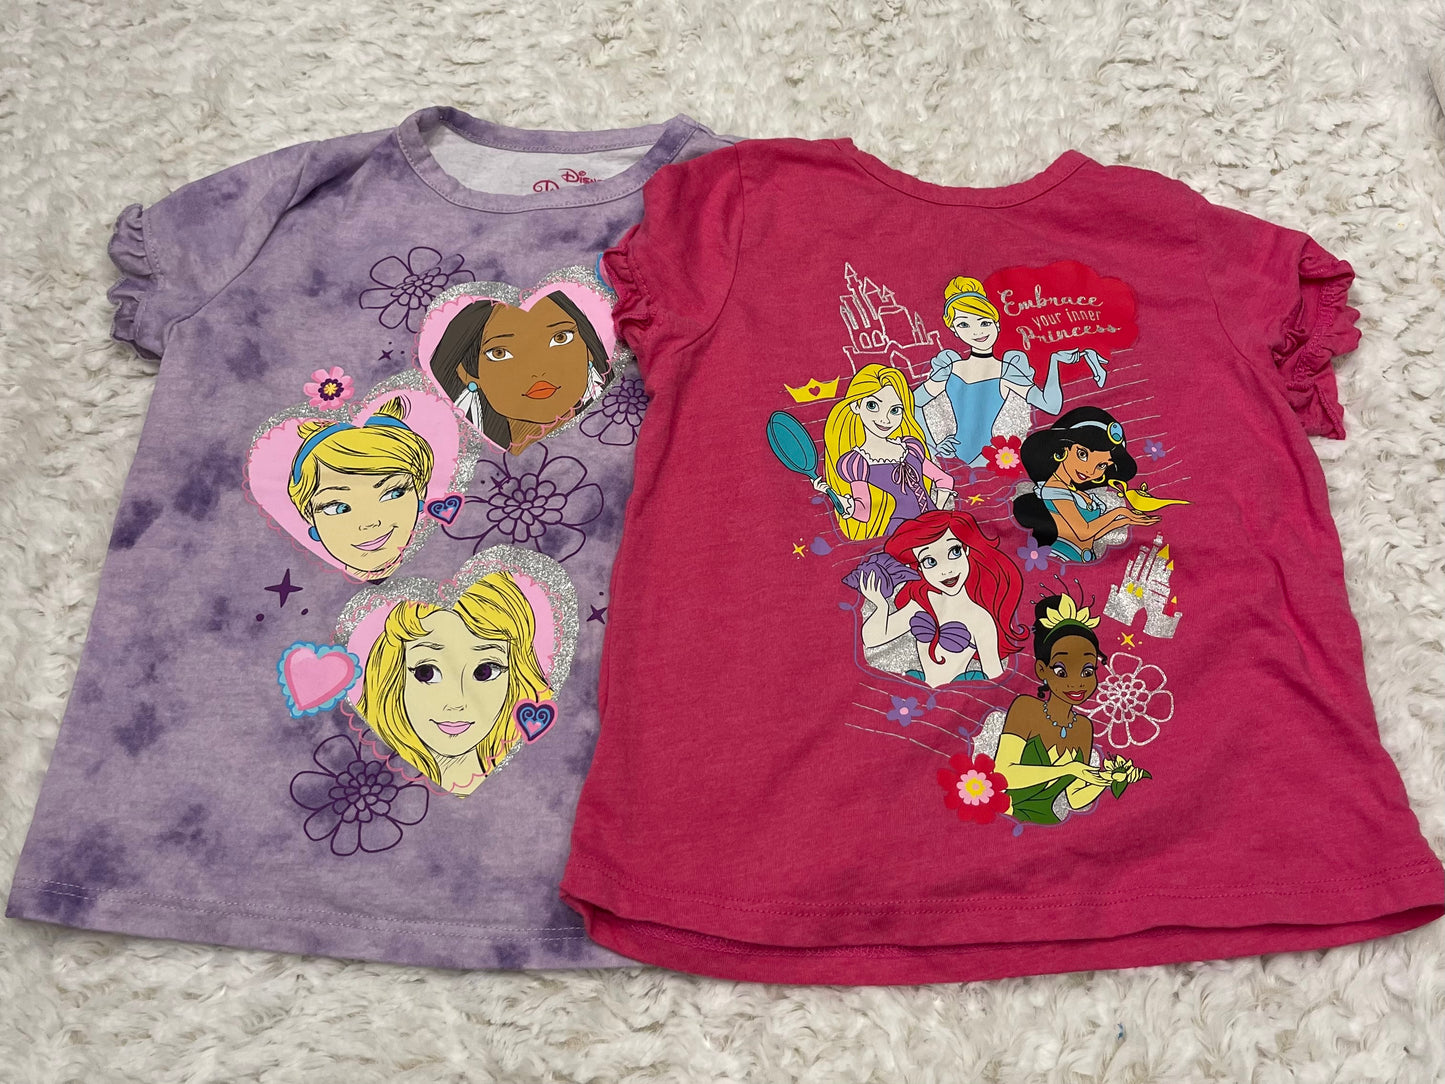 3T Disney Princess shirts